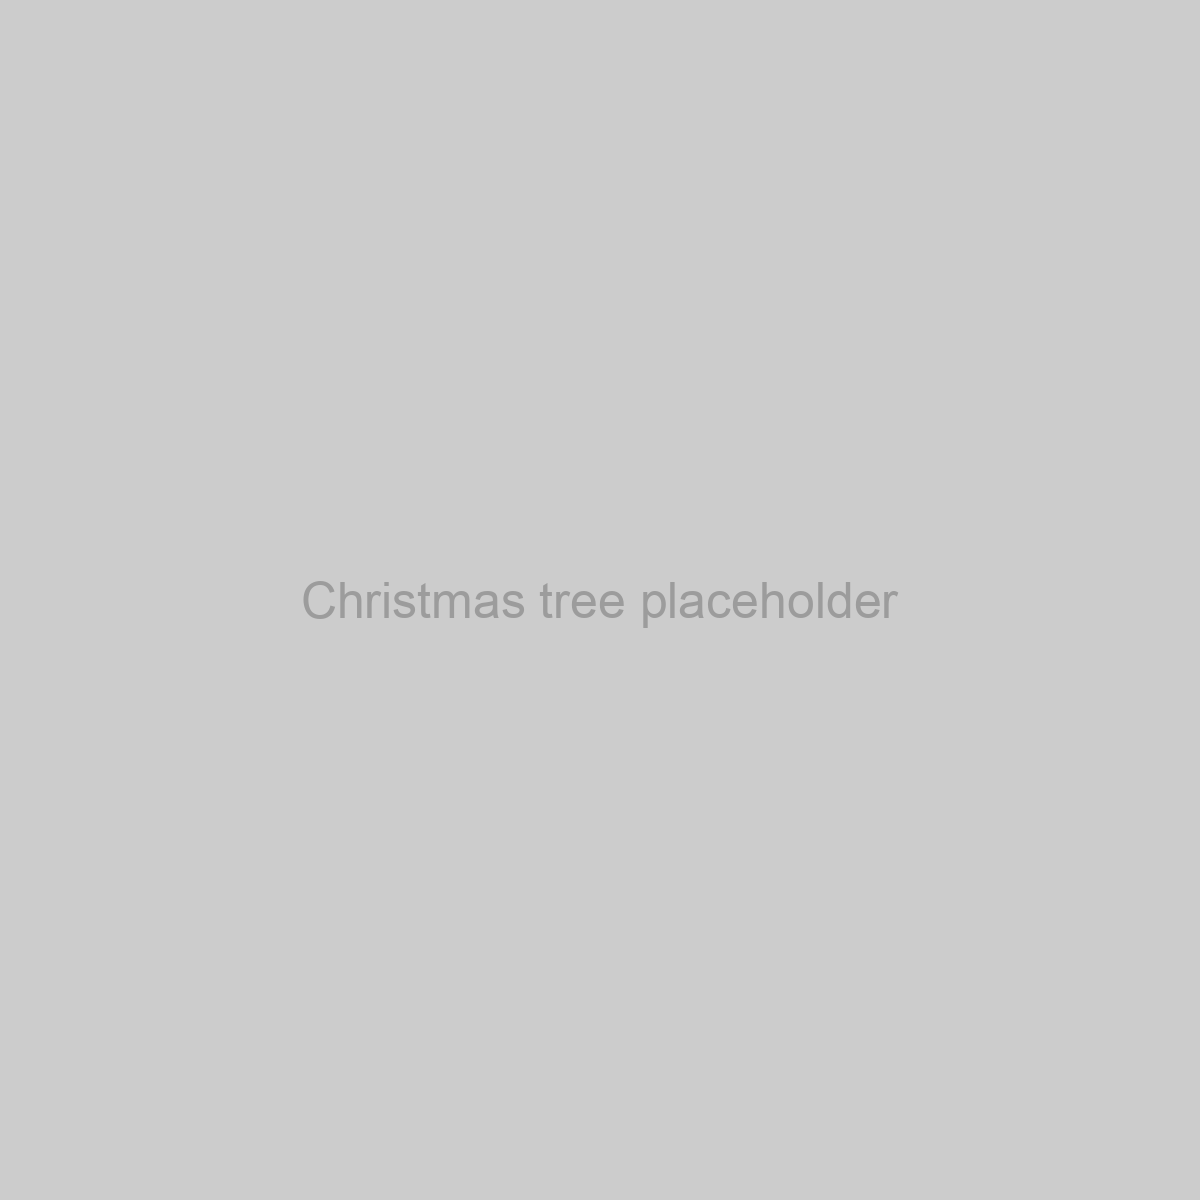 Christmas tree Placeholder Image